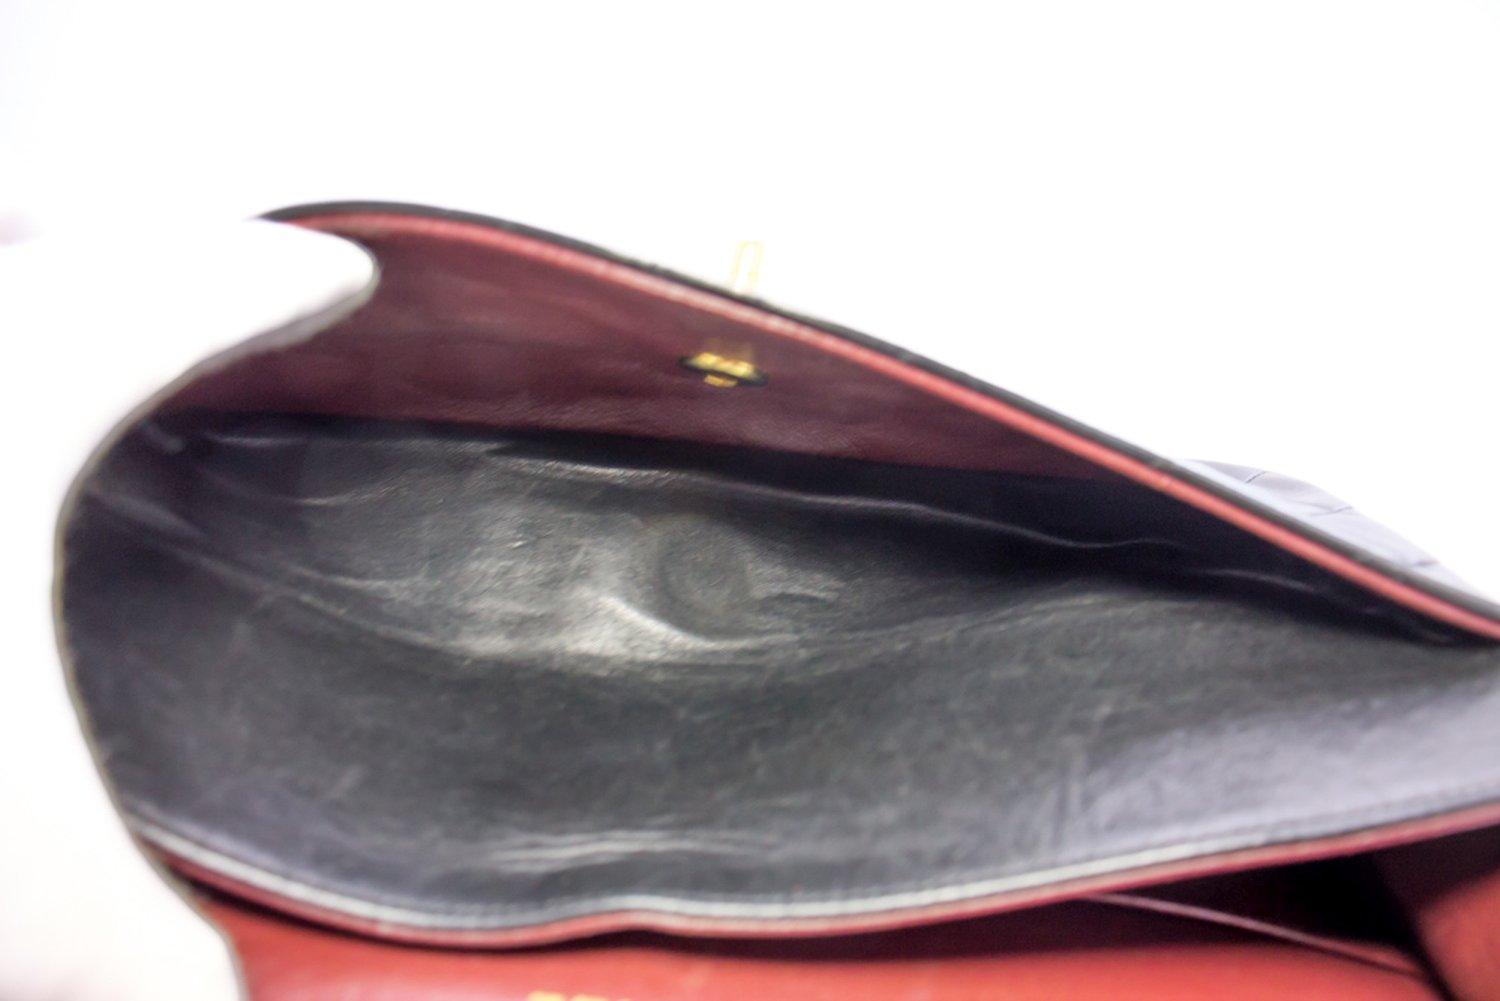 CHANEL 2.55 Double Flap Medium Chain Shoulder Bag Lambskin Black 14